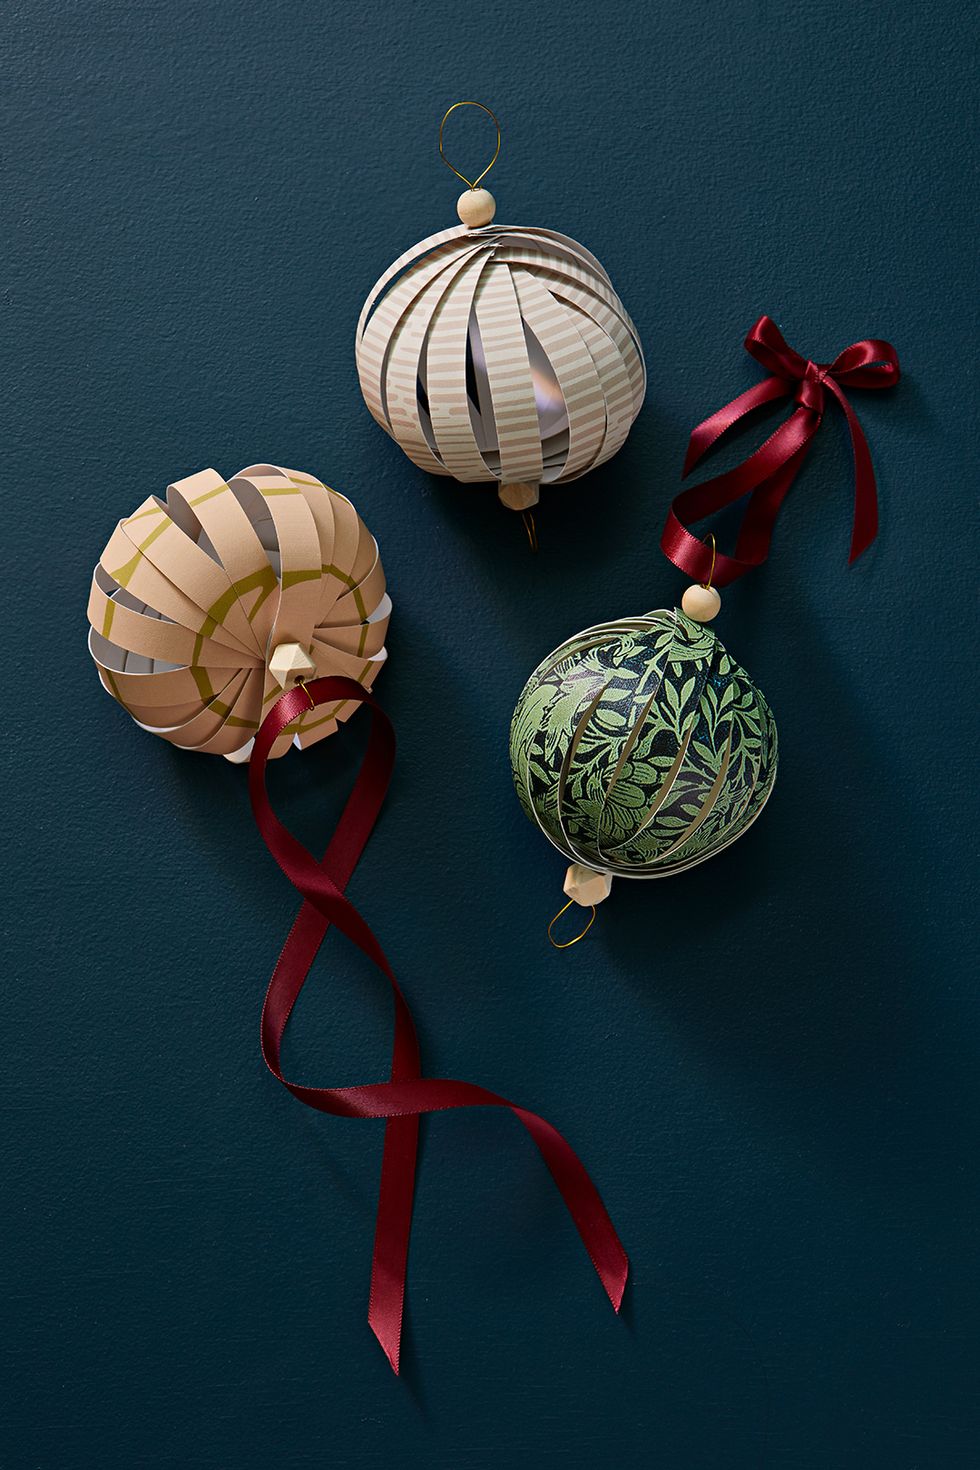 Christmas DIY craft: Handmade glass ornament